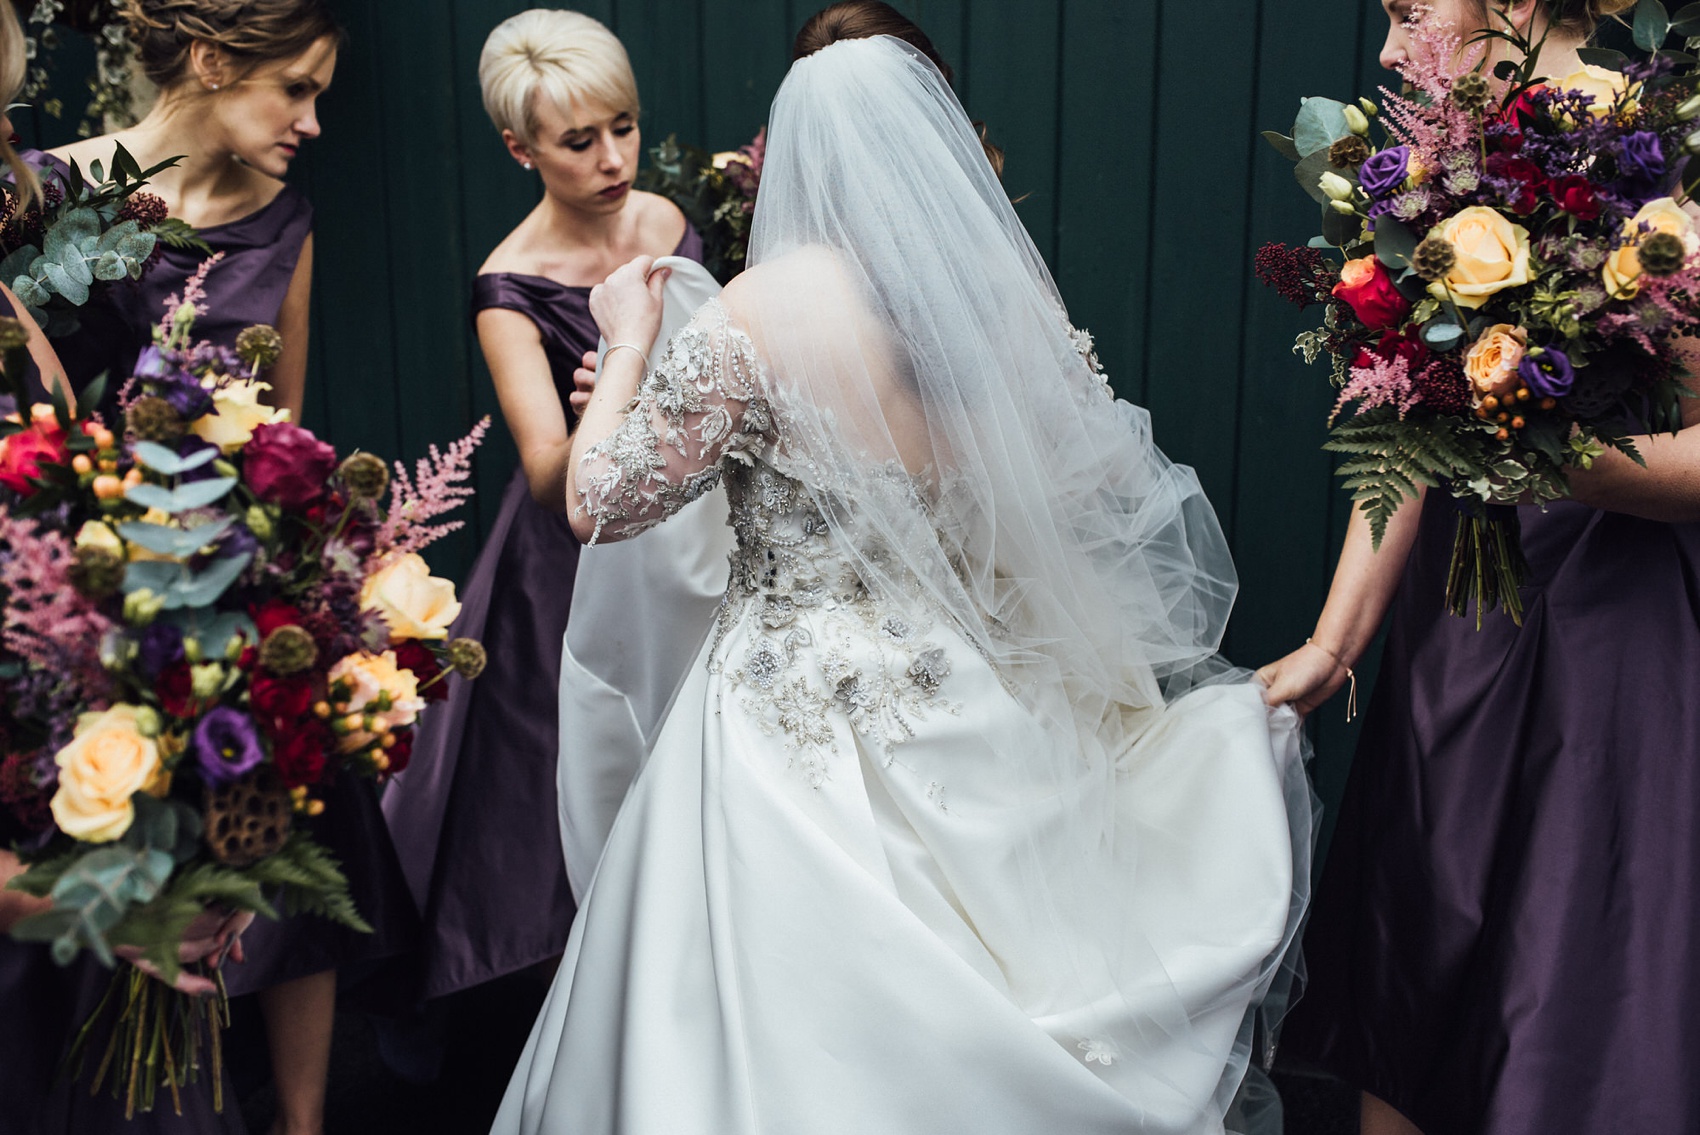 12 Bride made her own wedding dress